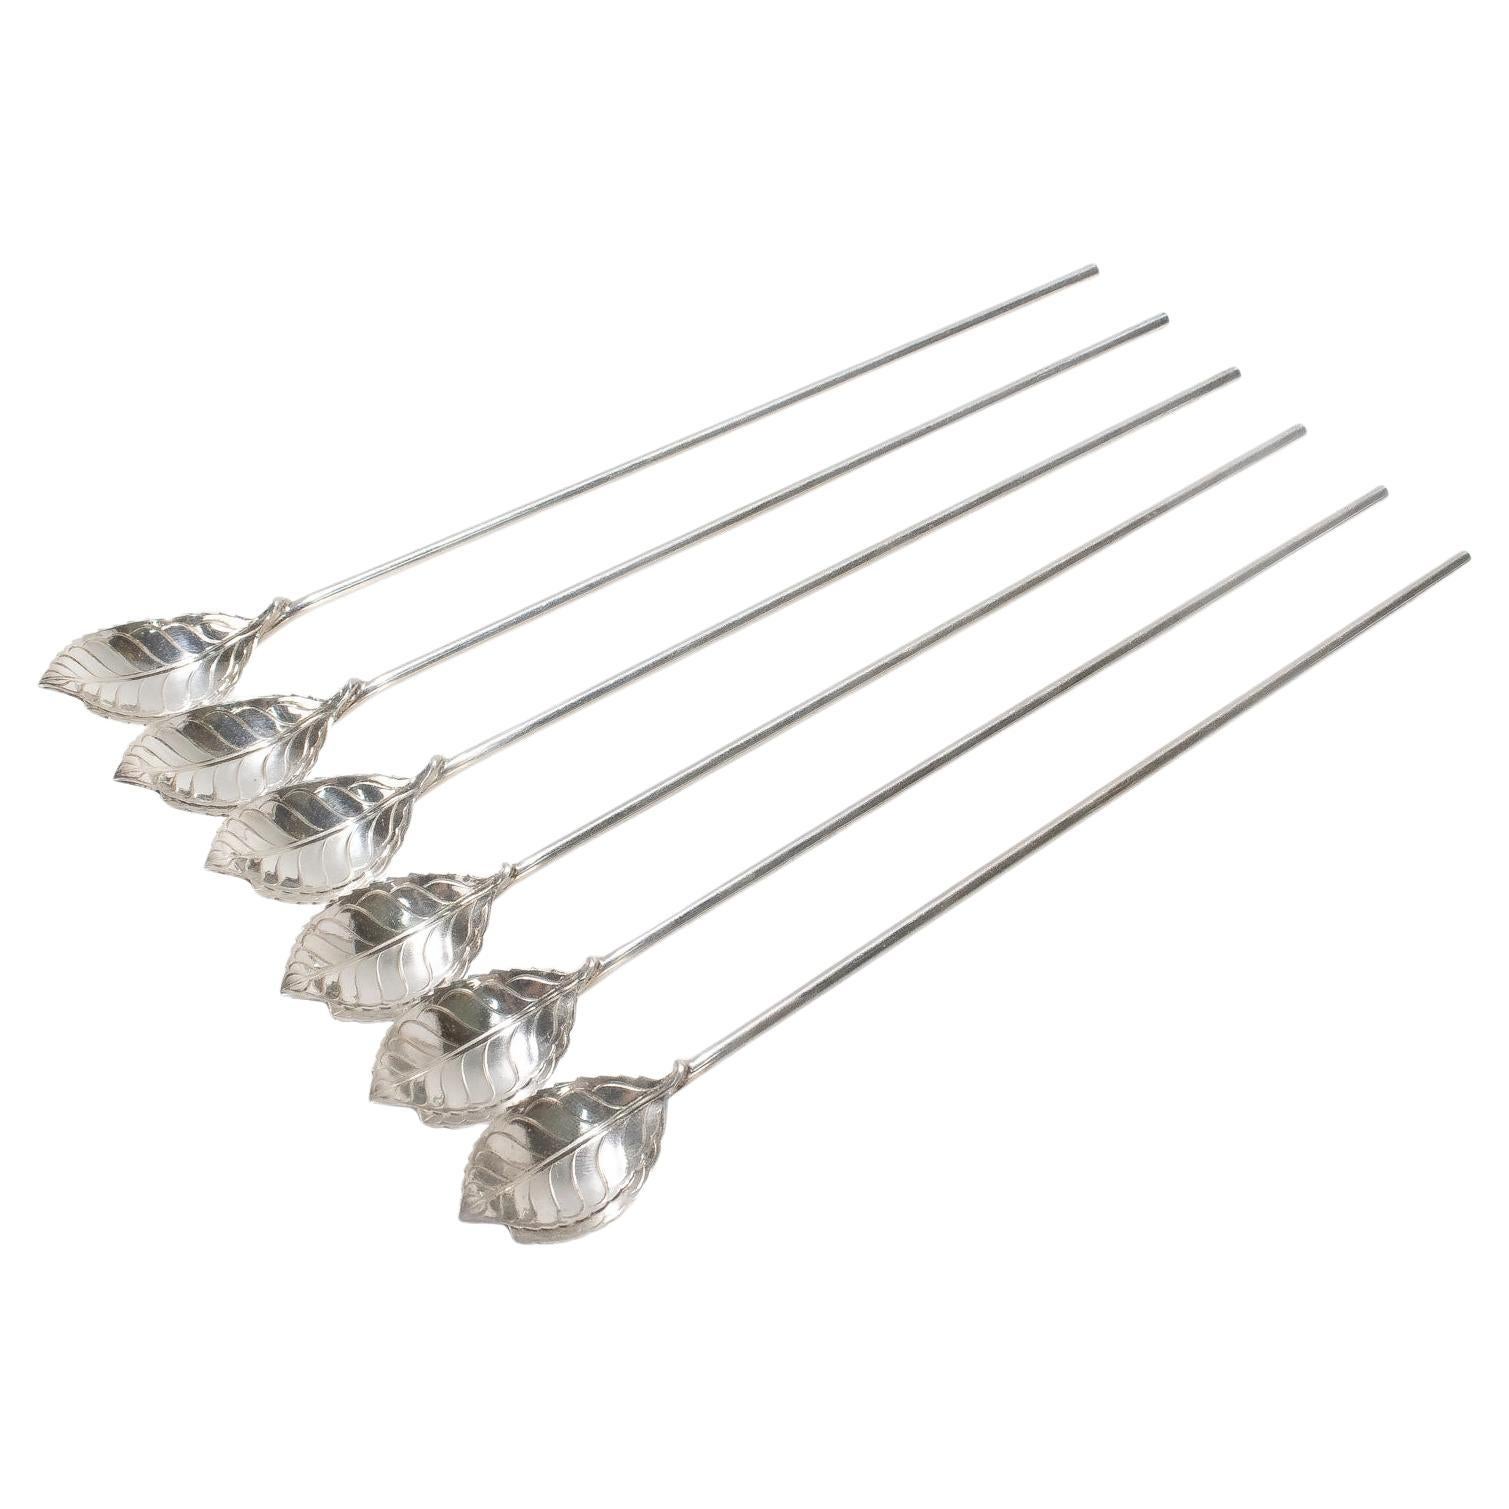 Set of 6 Tiffany & Co. Sterling Silver Leaf Form Ice Tea Straws